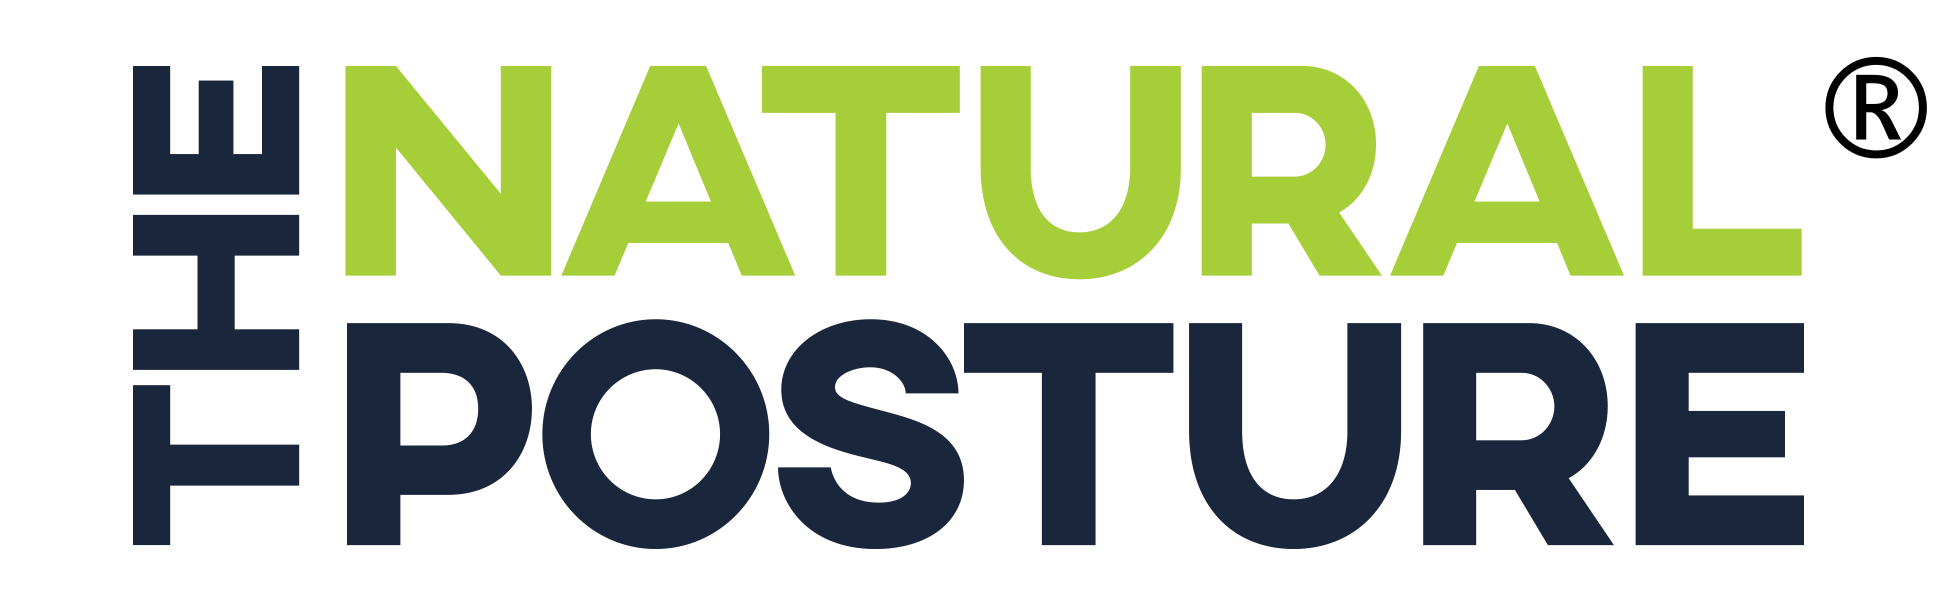 Intelligent Neck Massager Remote Control - The Natural Posture